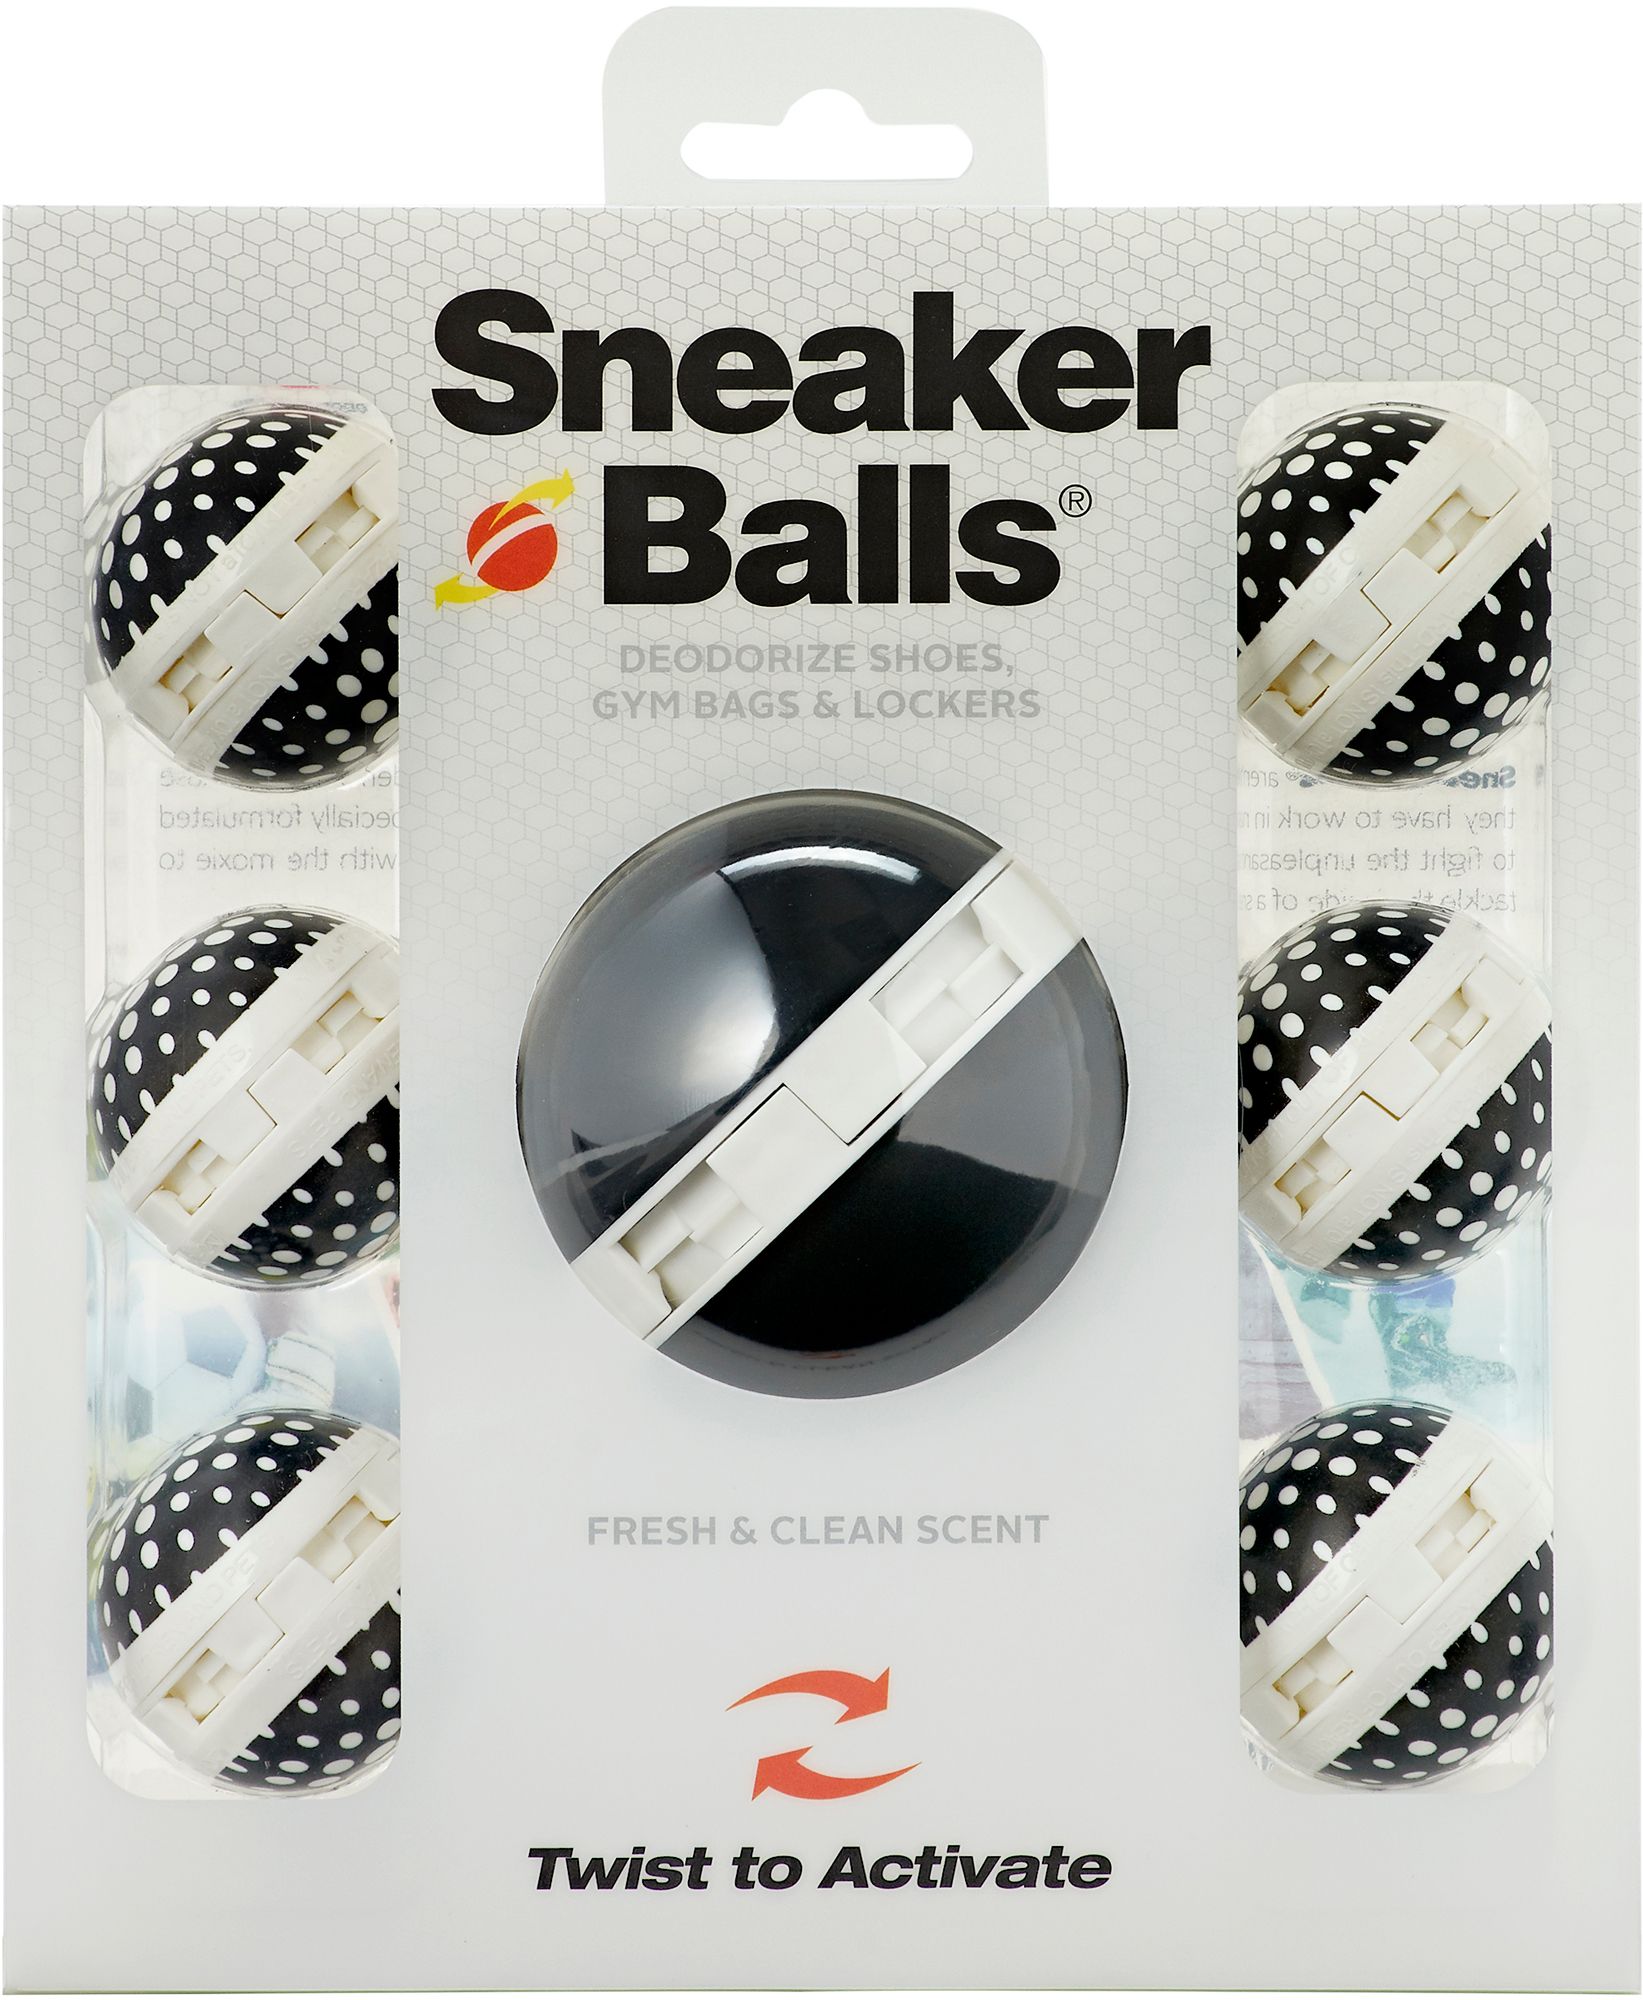 sneaker balls